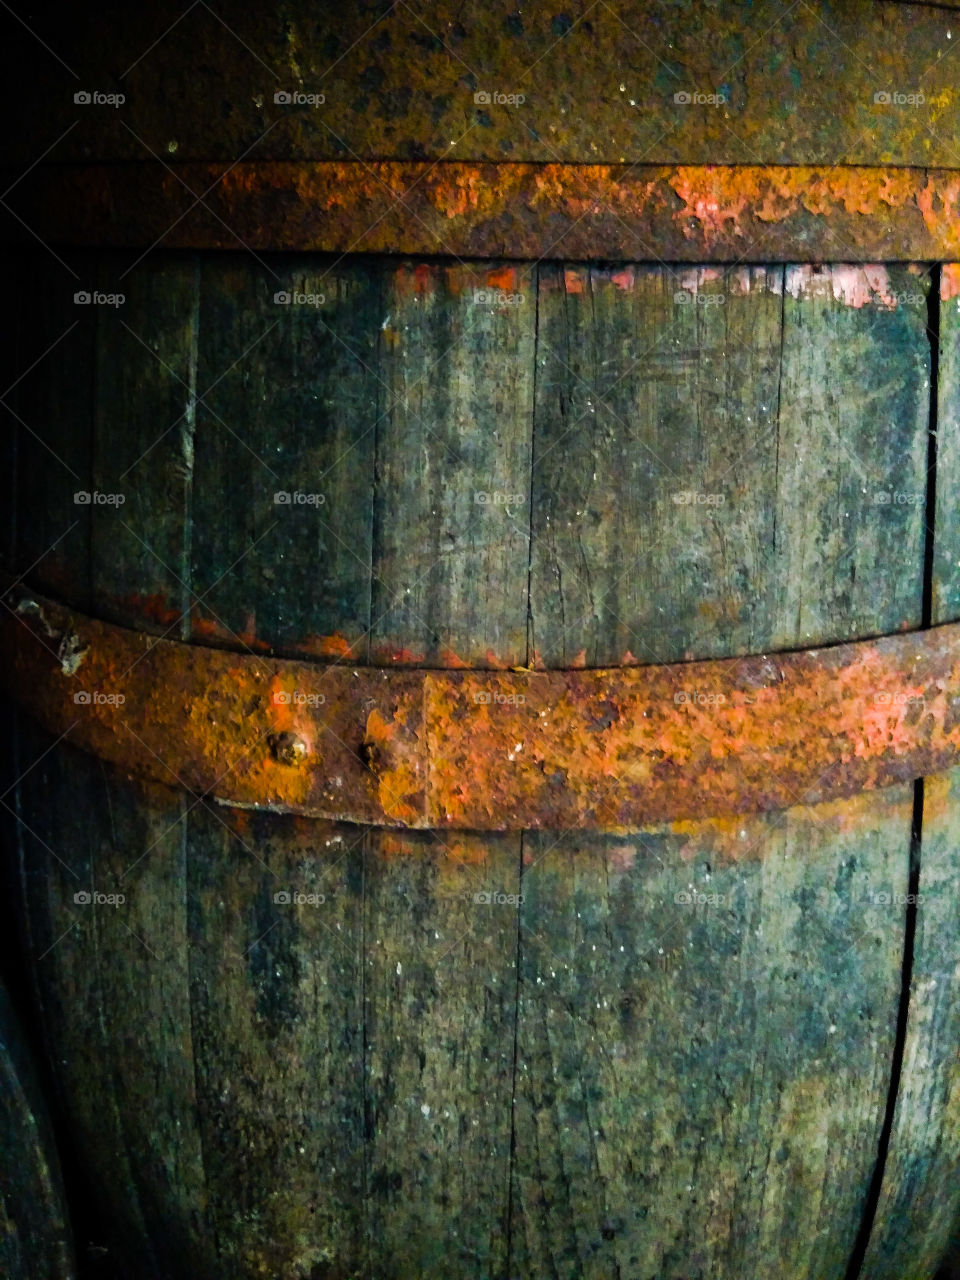 Rusty barrel